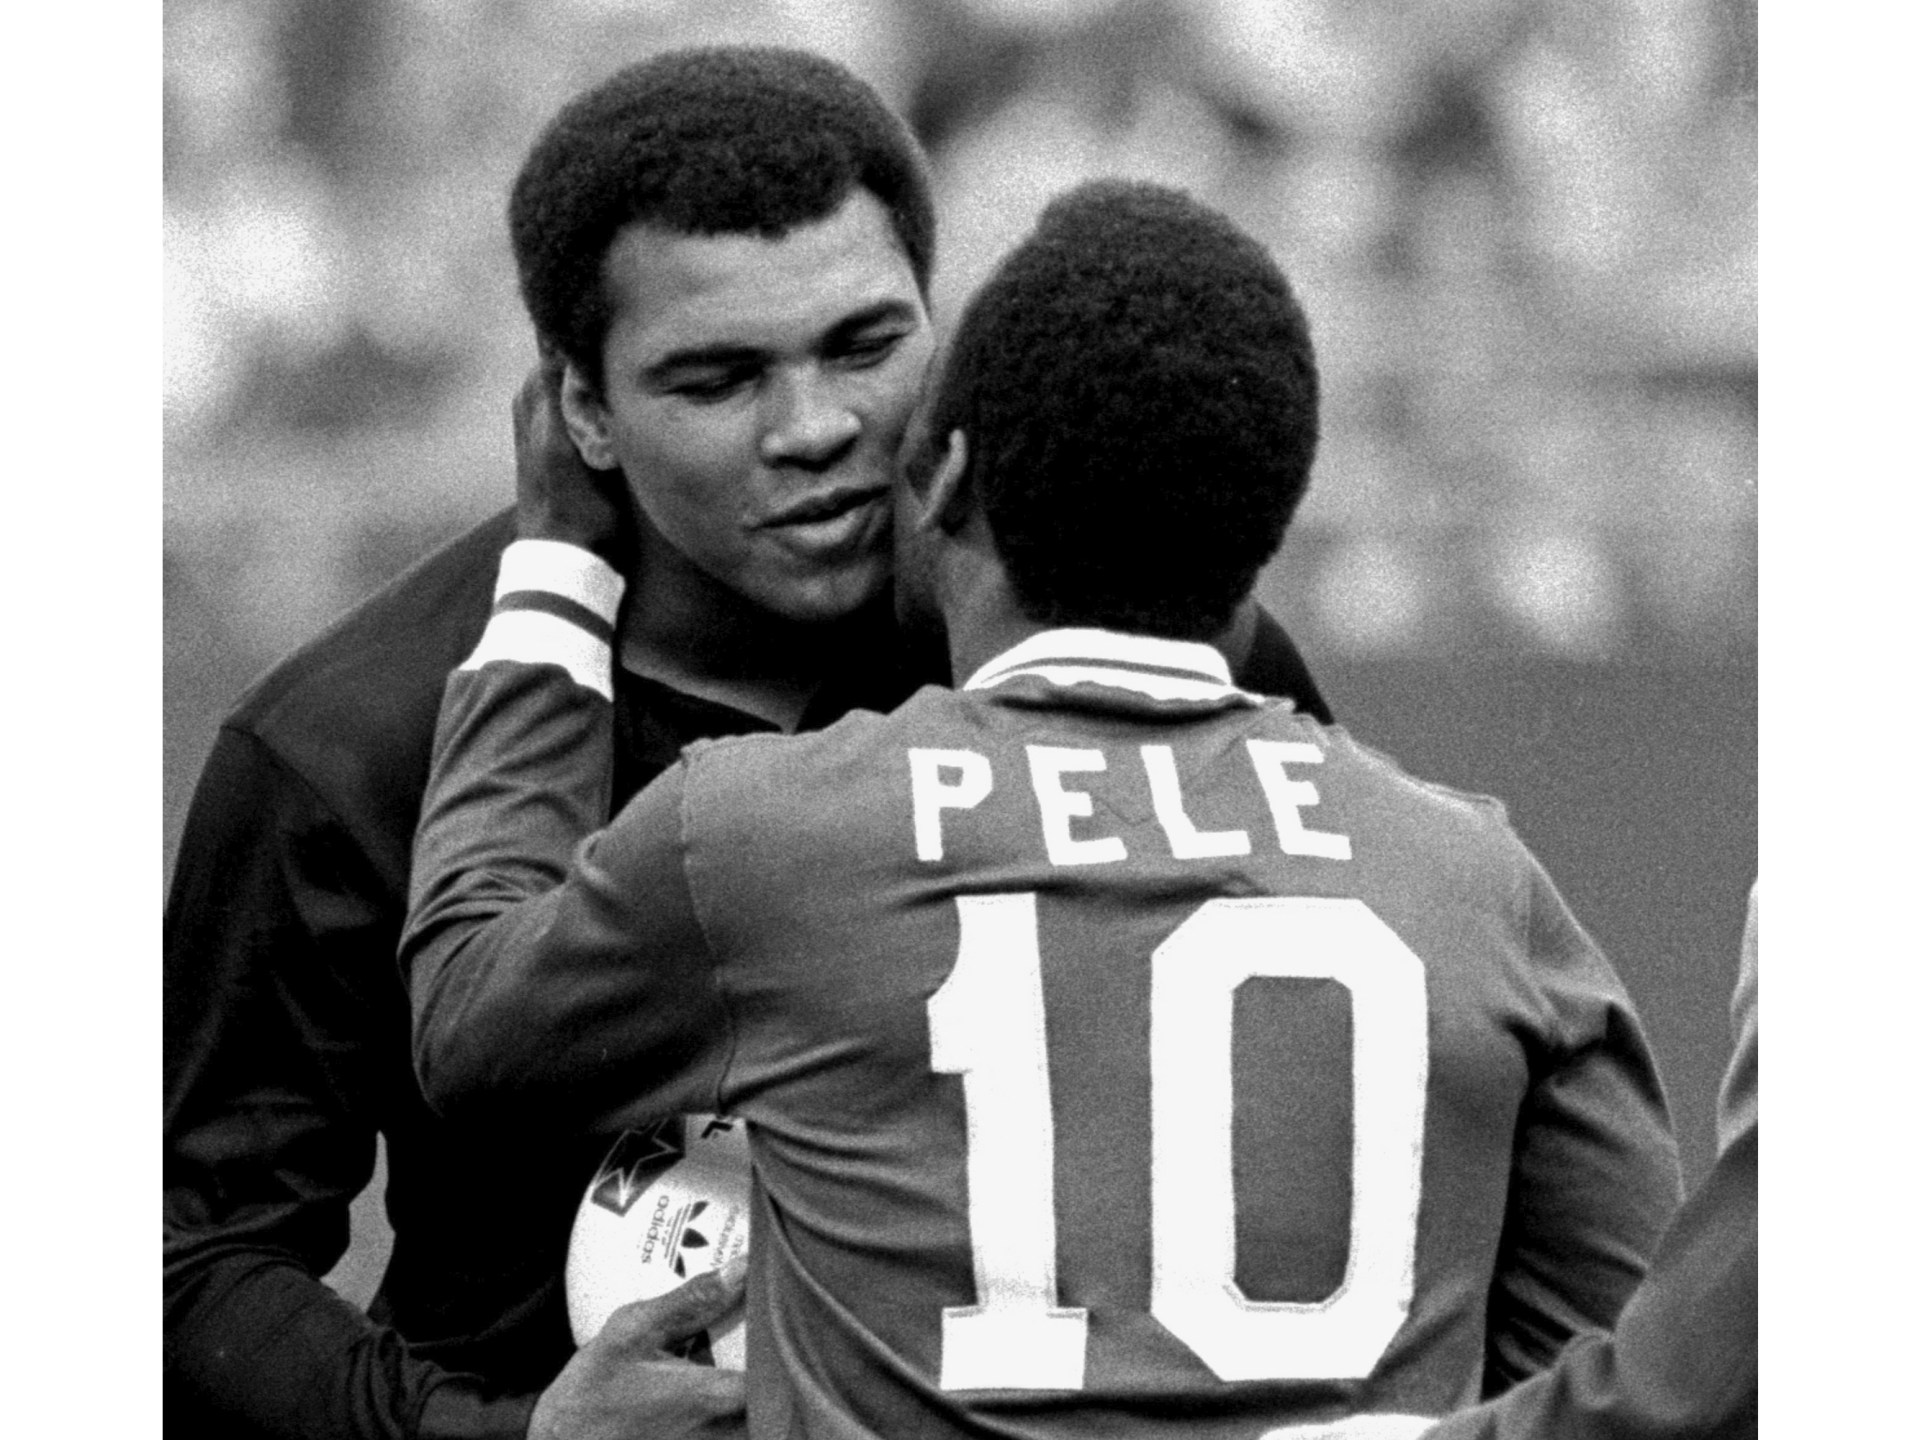 It’s not true that Pelé didn’t struggle racism